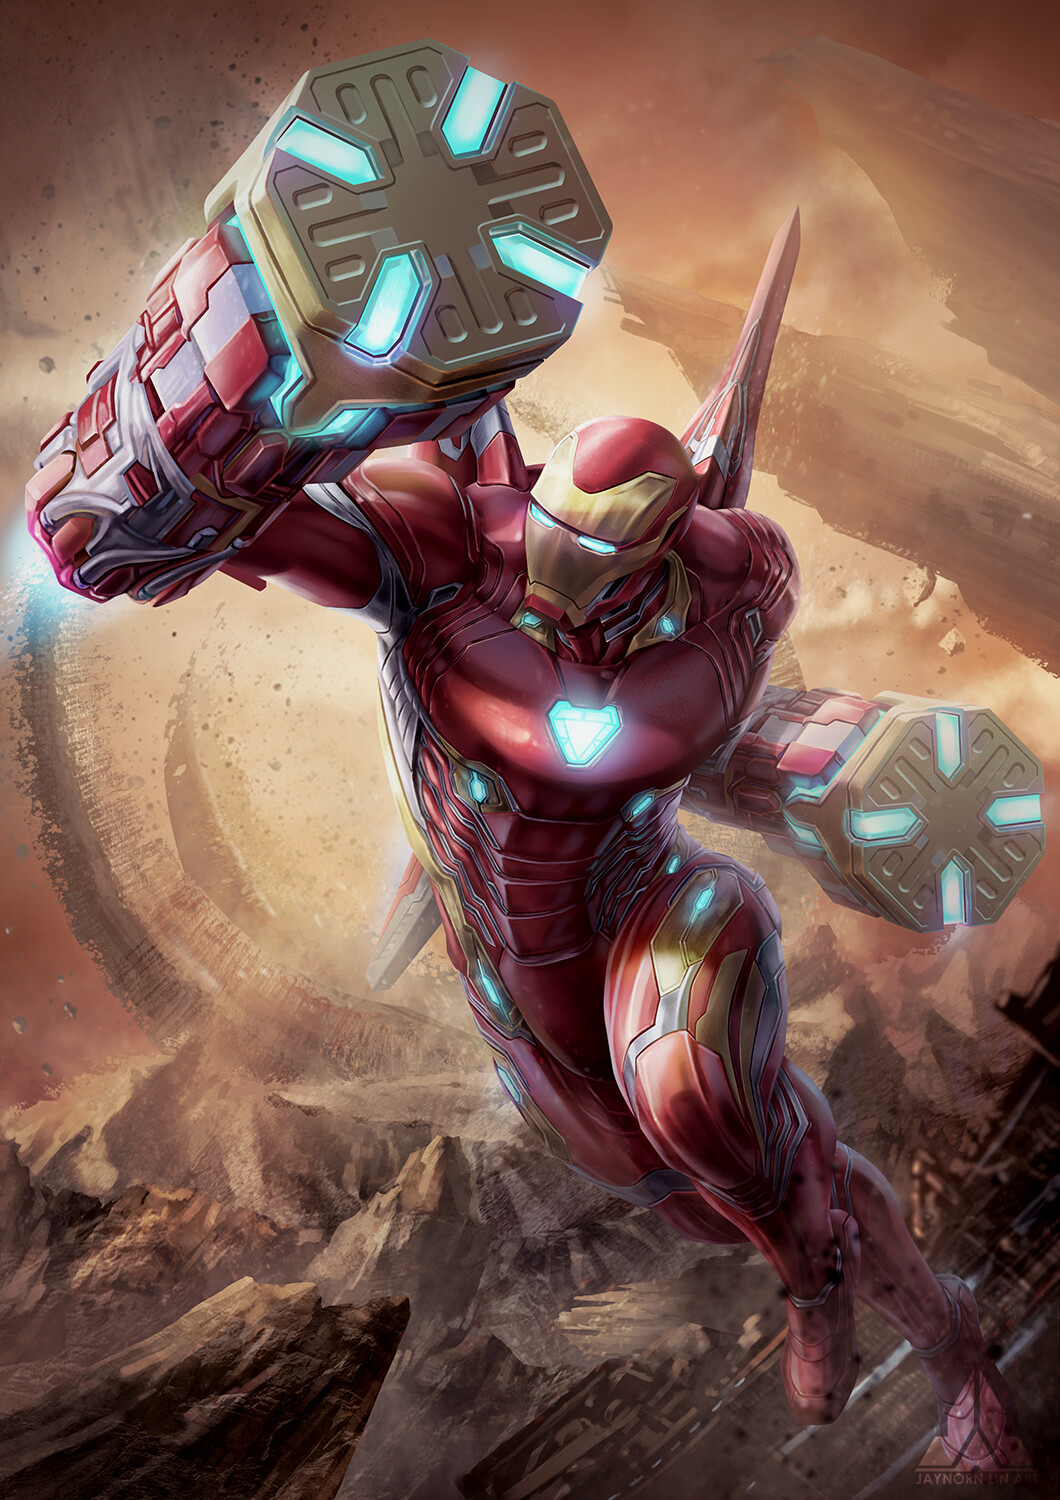 ArtStation - Avengers: Infinity War - Iron Man